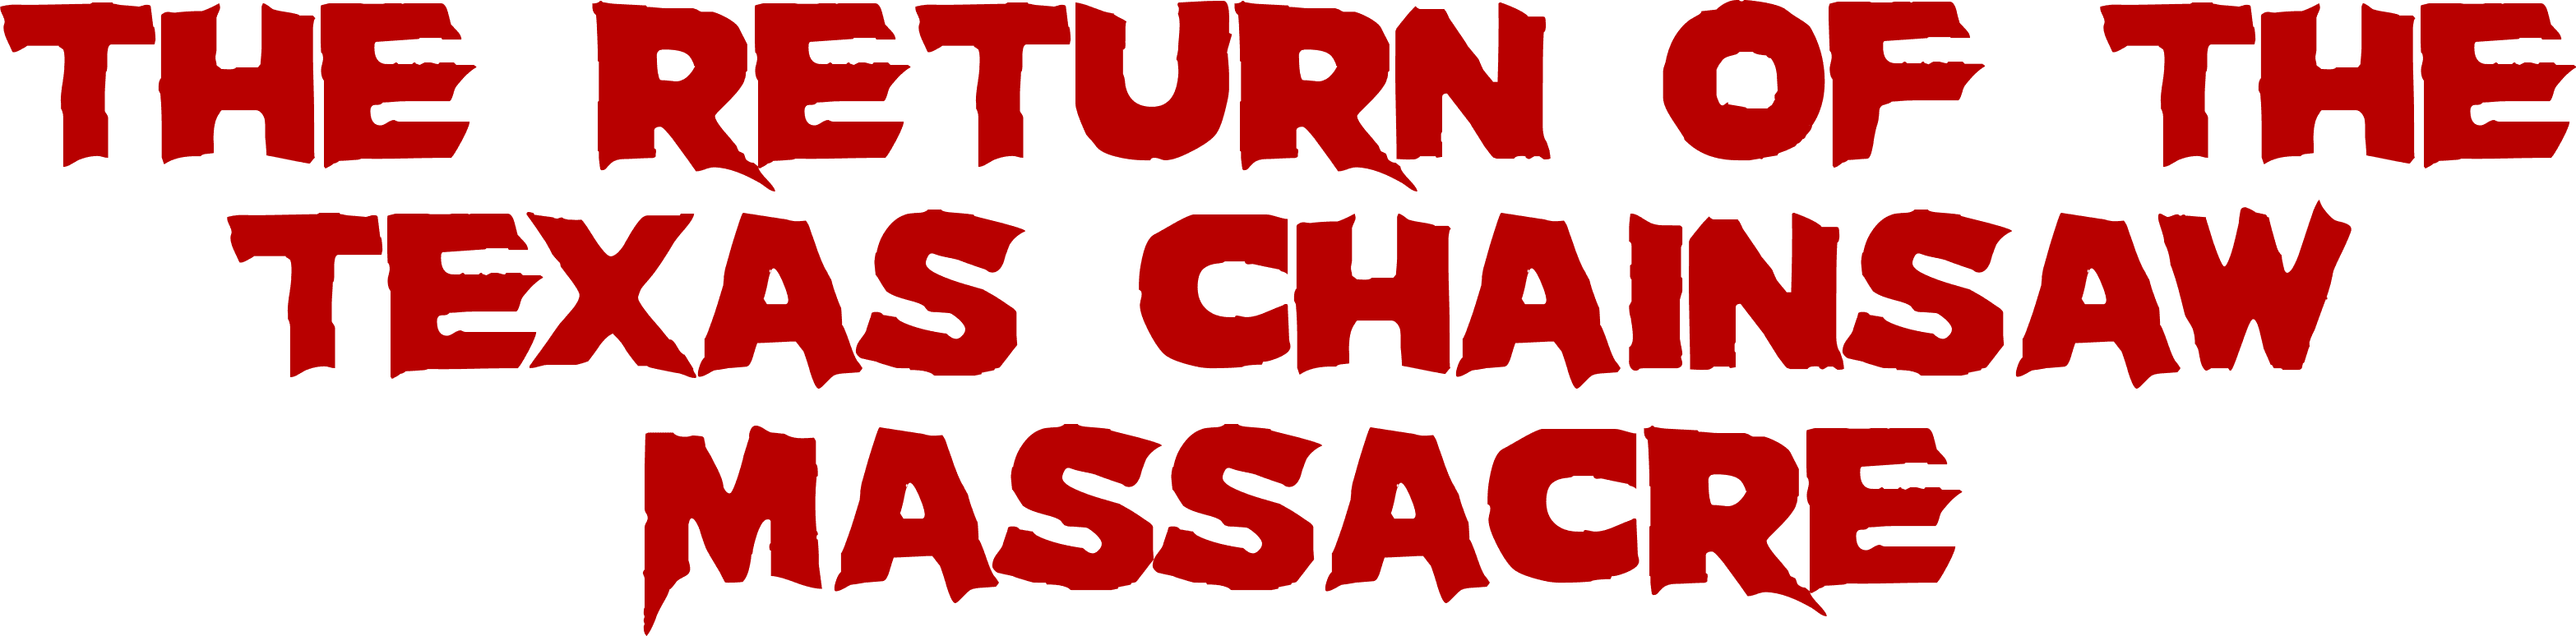 The Return of the Texas Chainsaw Massacre logo